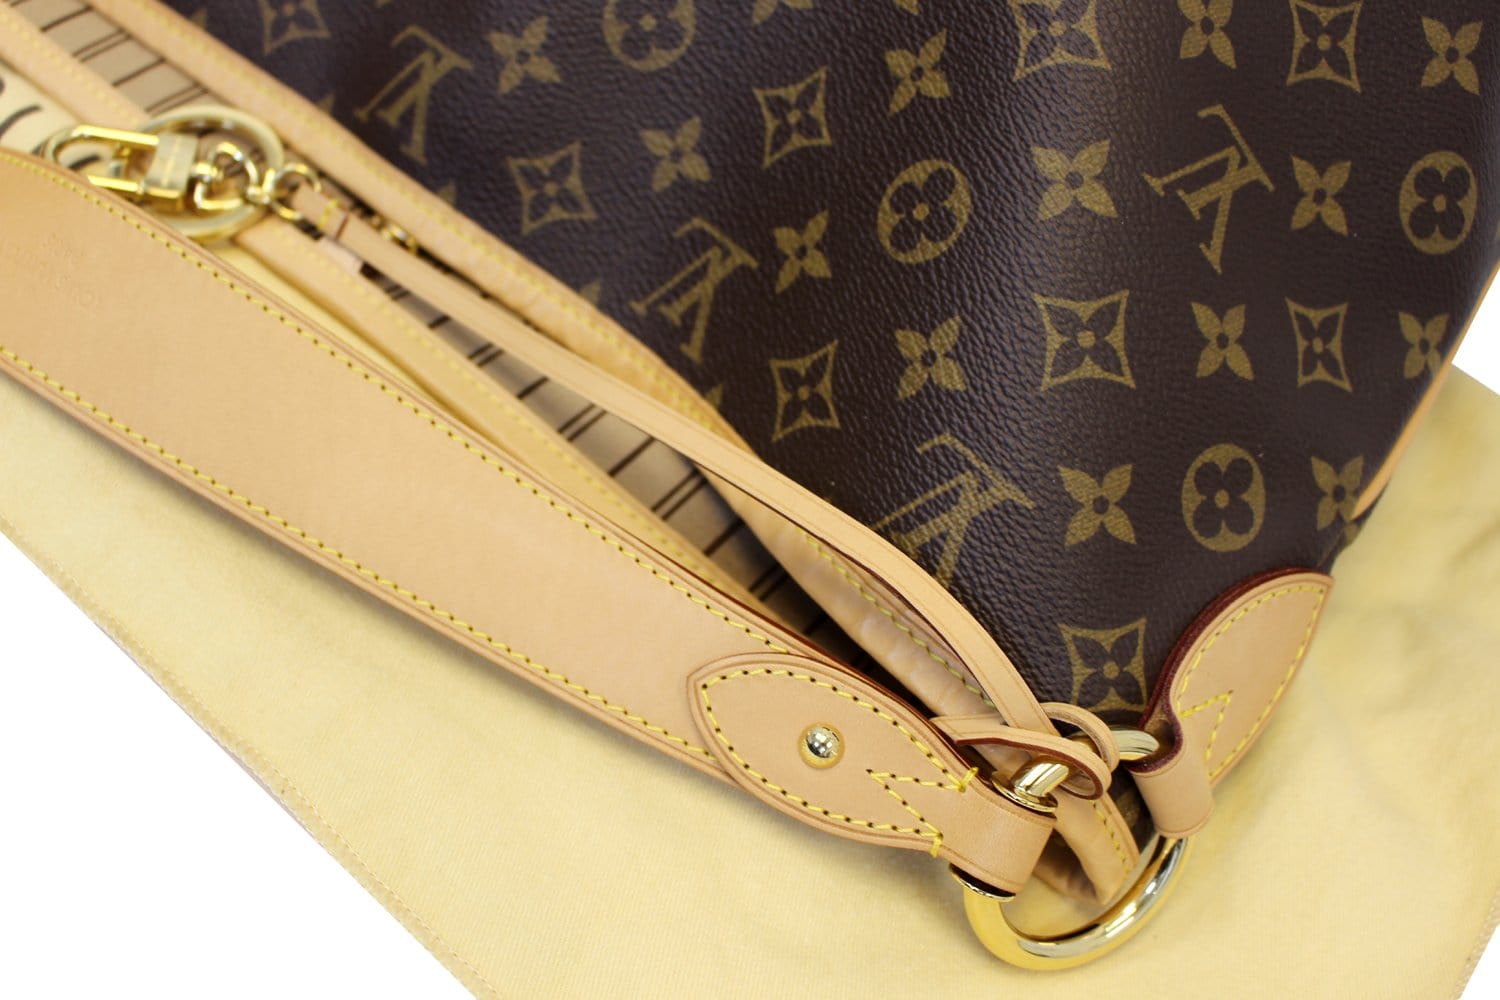 Louis Vuitton Delightful NM Handbag Damier MM White 2285161